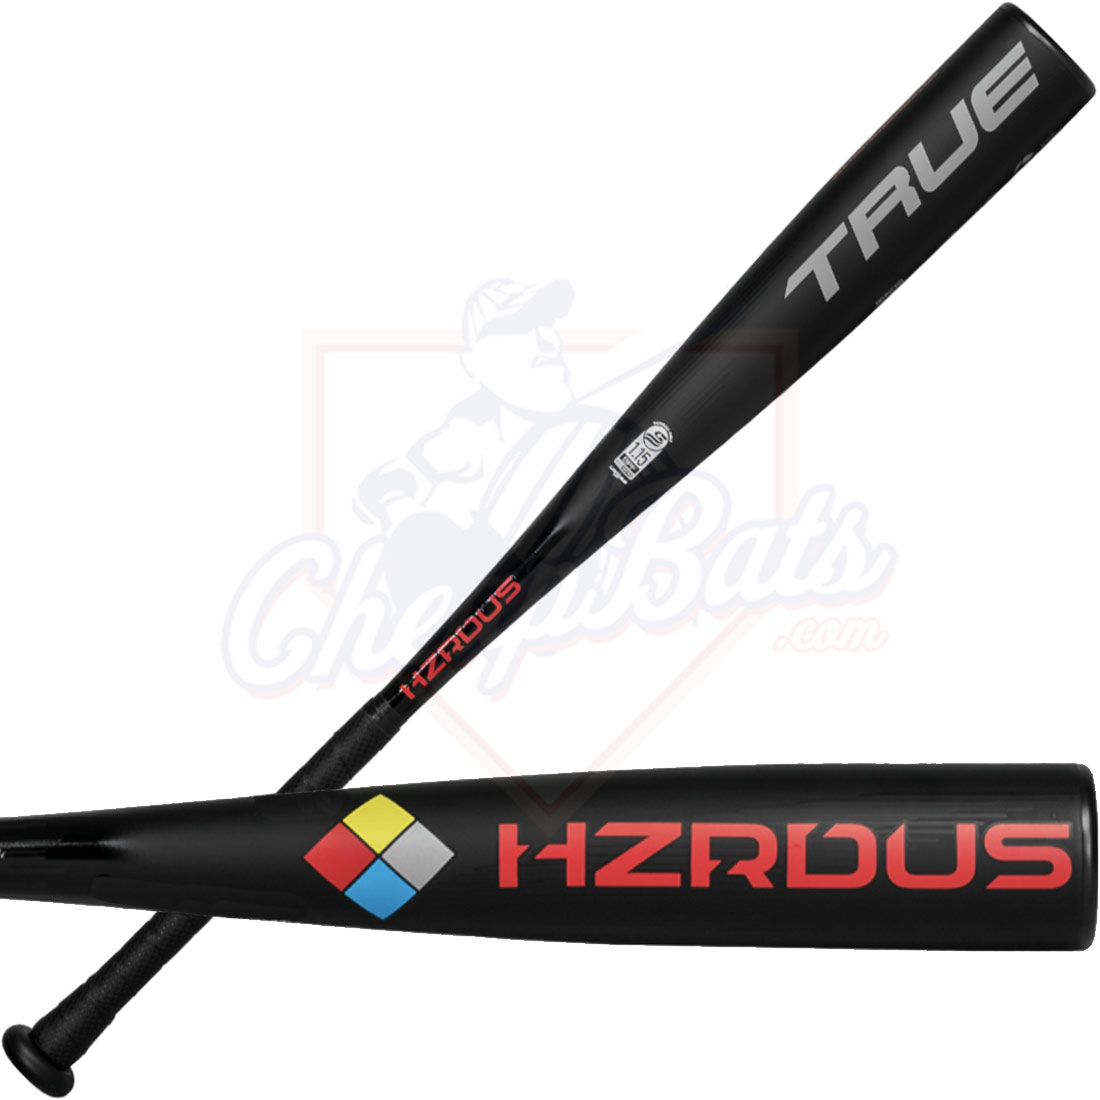 True Temper HZRDUS Youth USSSA Baseball Bat -10oz UT-22-HZR-X-10